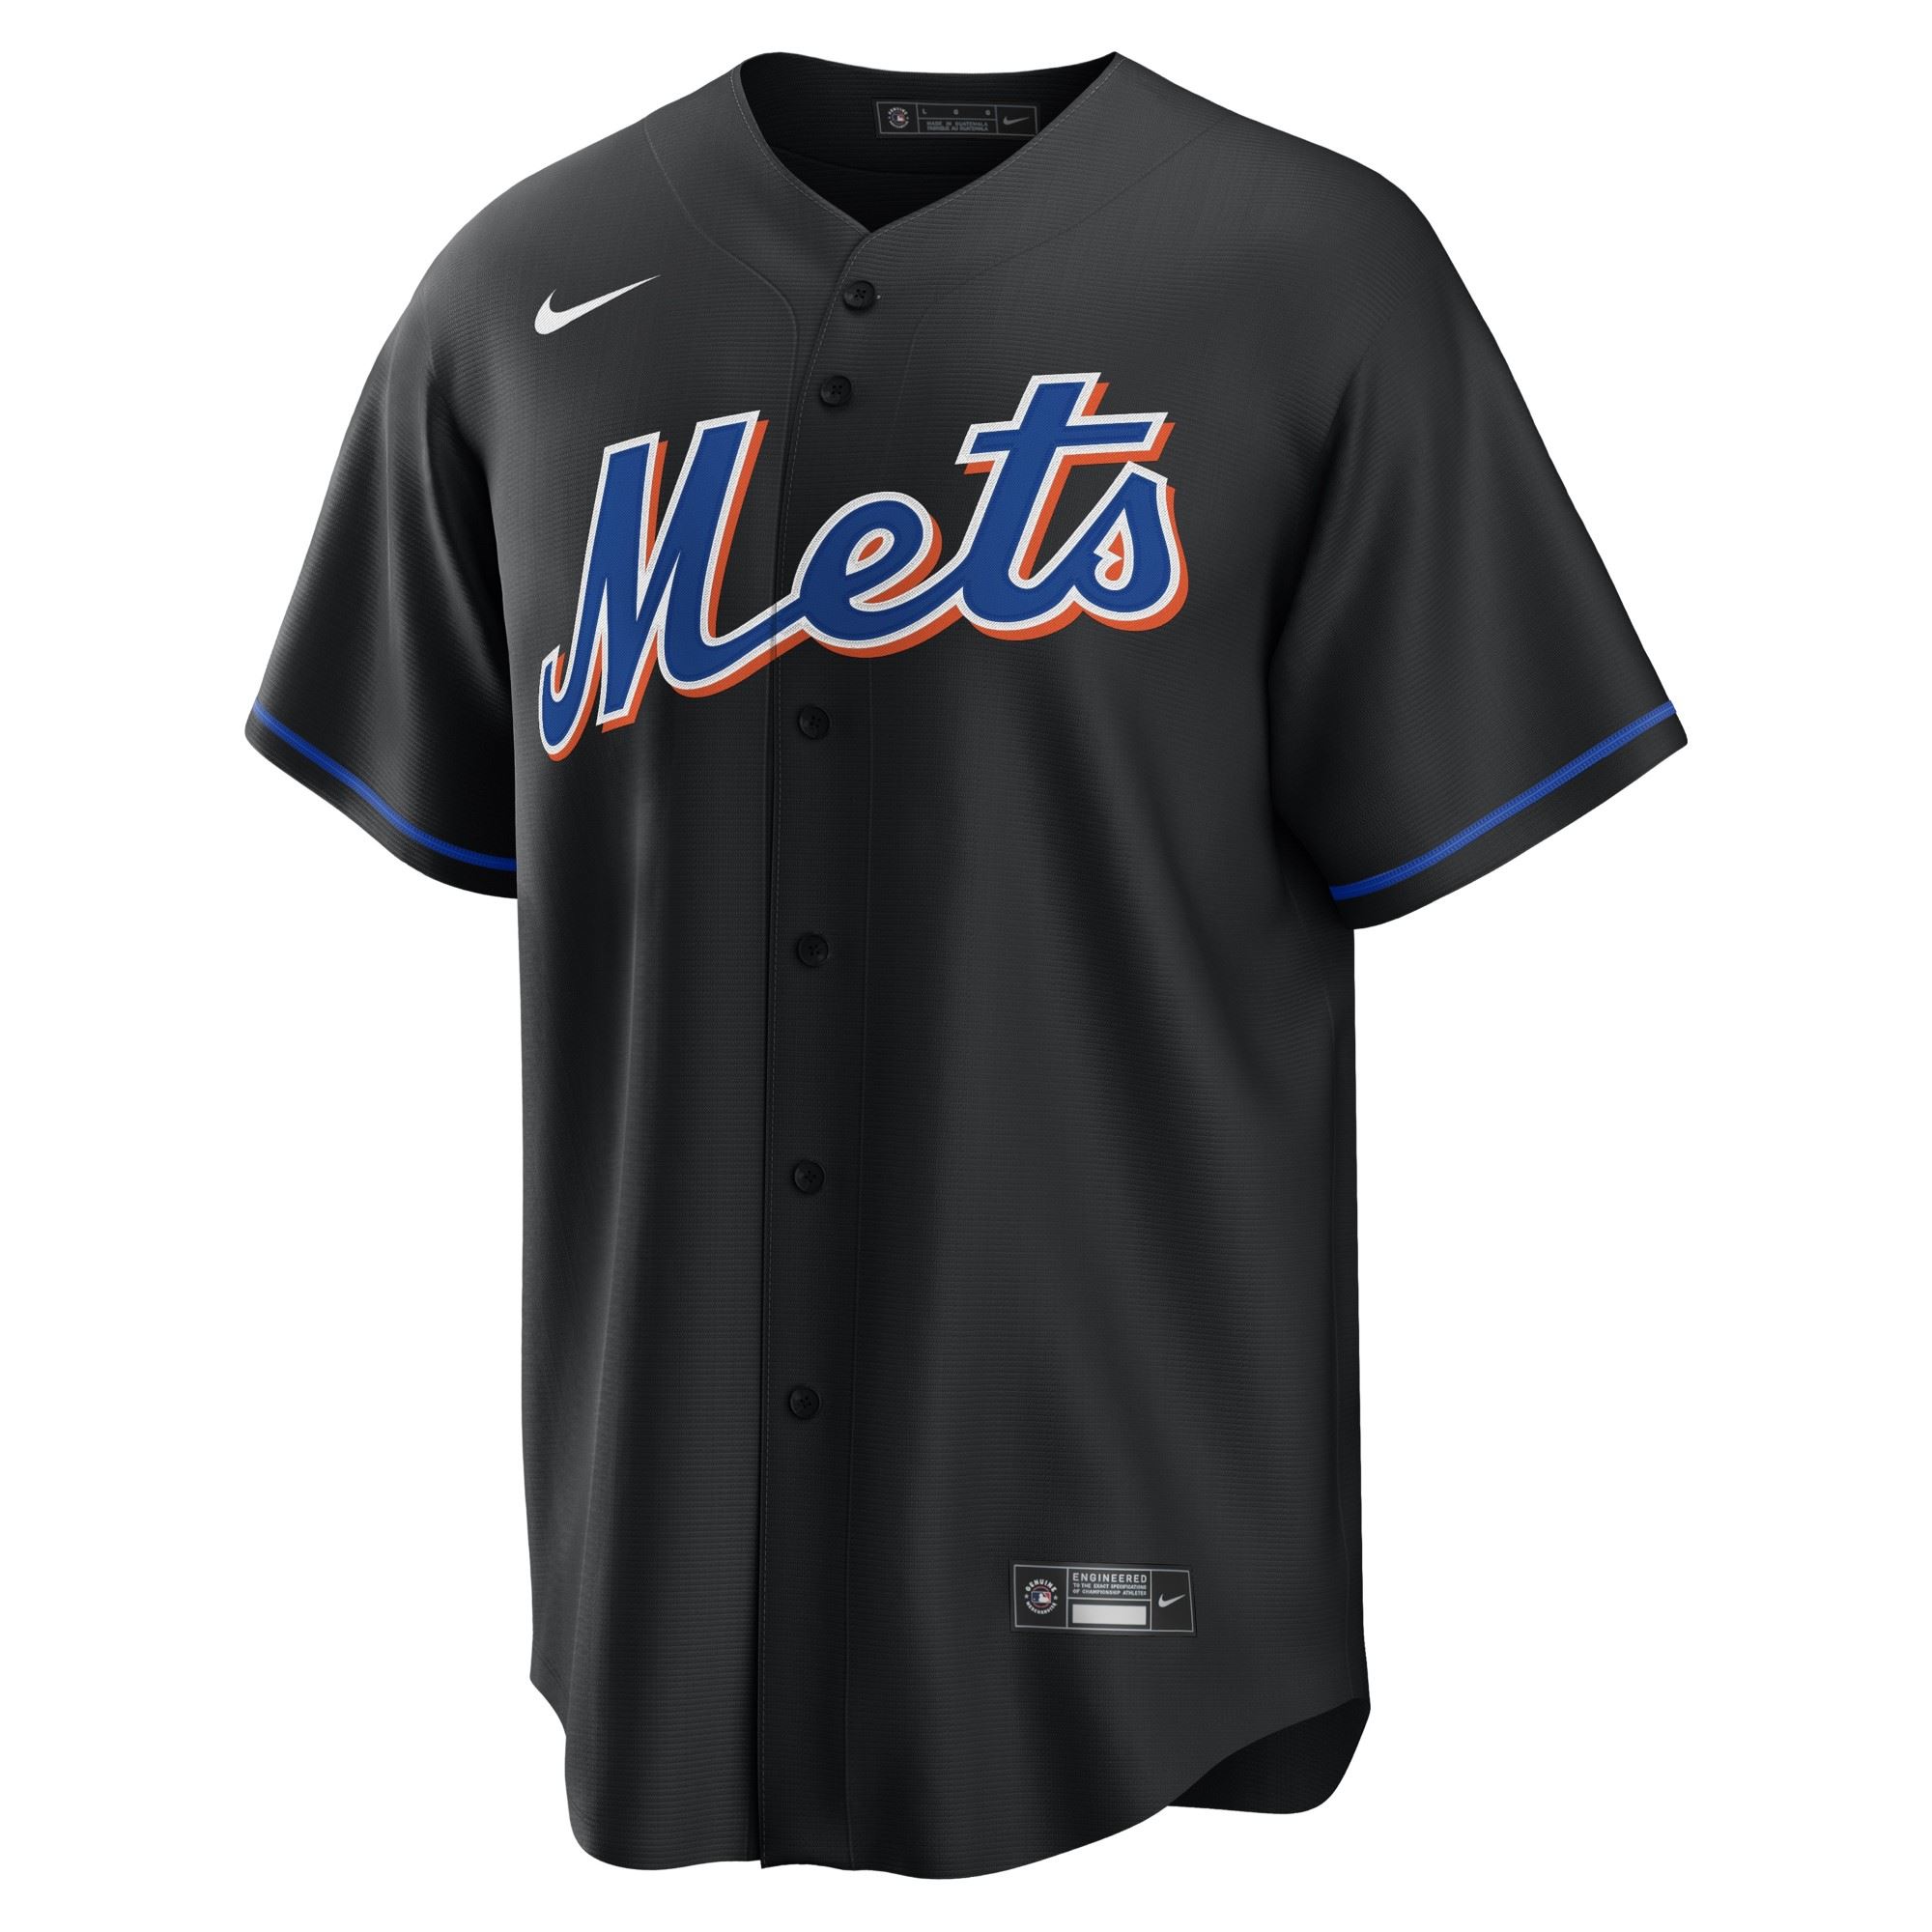 New York Mets Black Official MLB Replica Alternate Jersey Nike